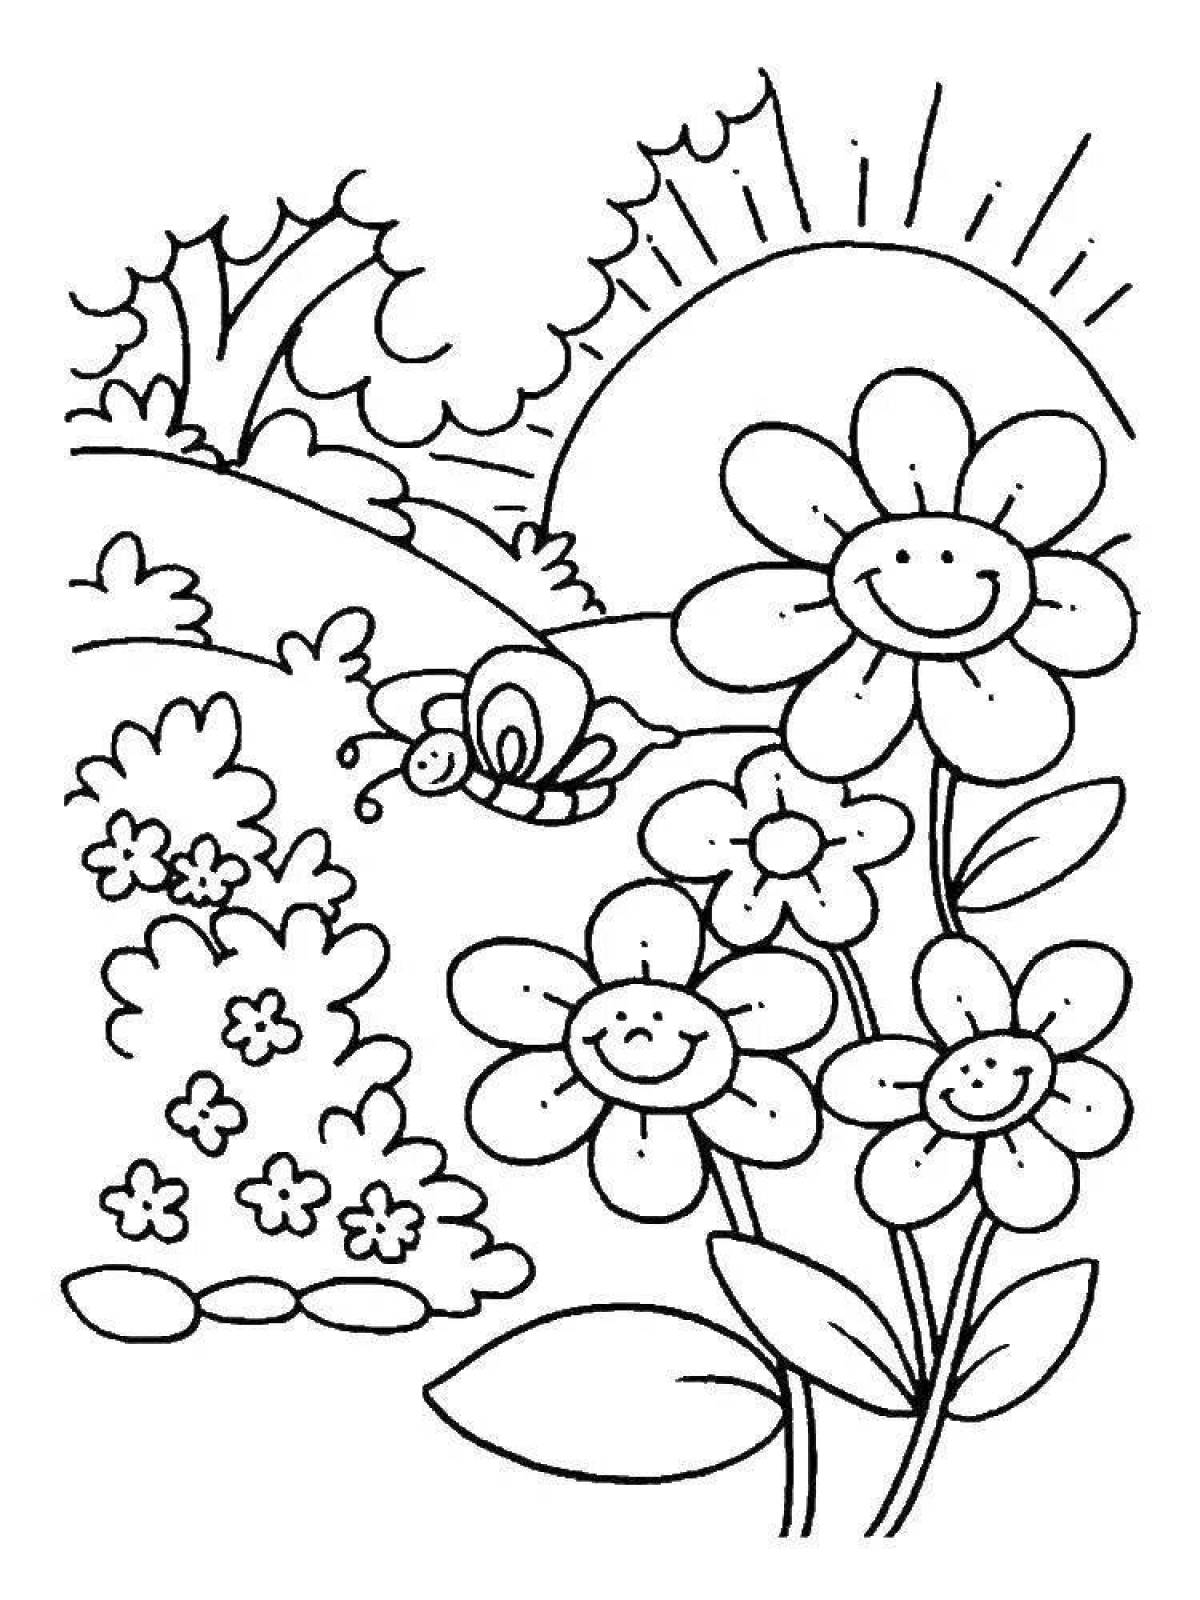 Adorable meadow coloring page